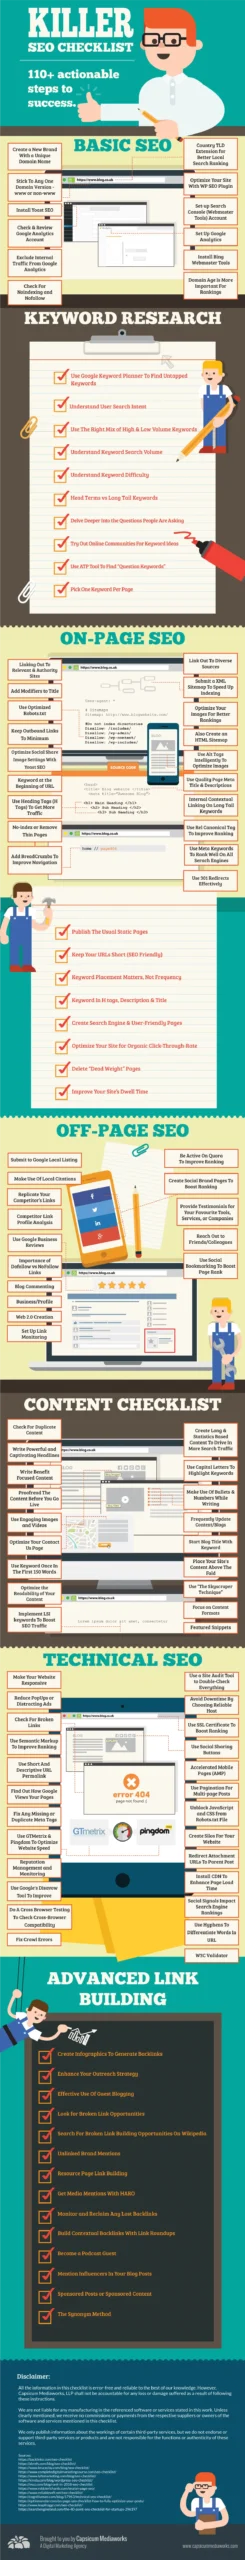 seo-checklist-Infographic